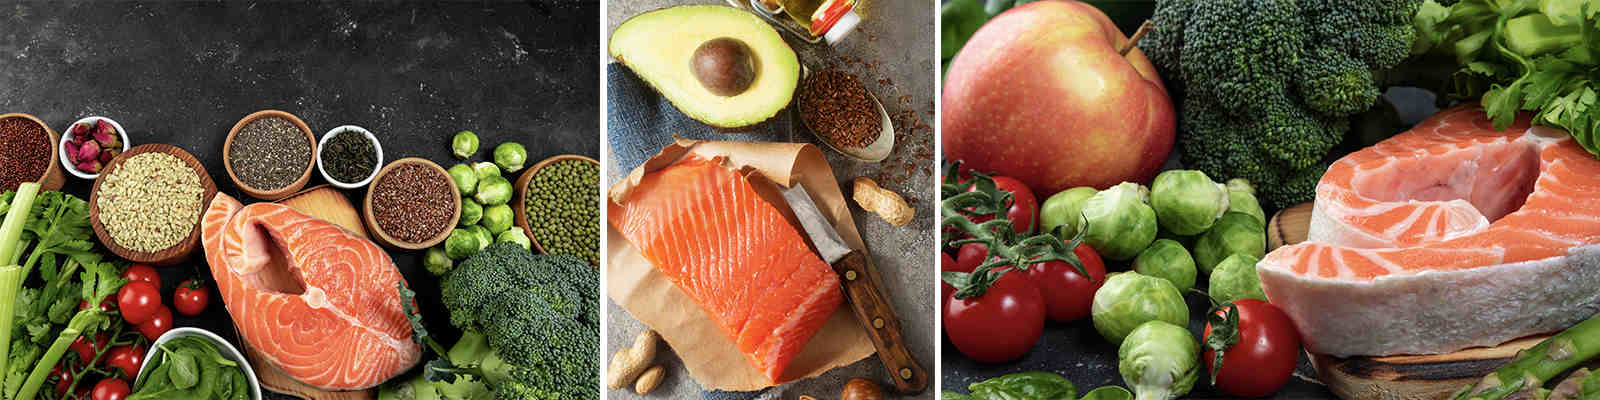 8 Foods High in Omega 3 - Ben's Natural Health